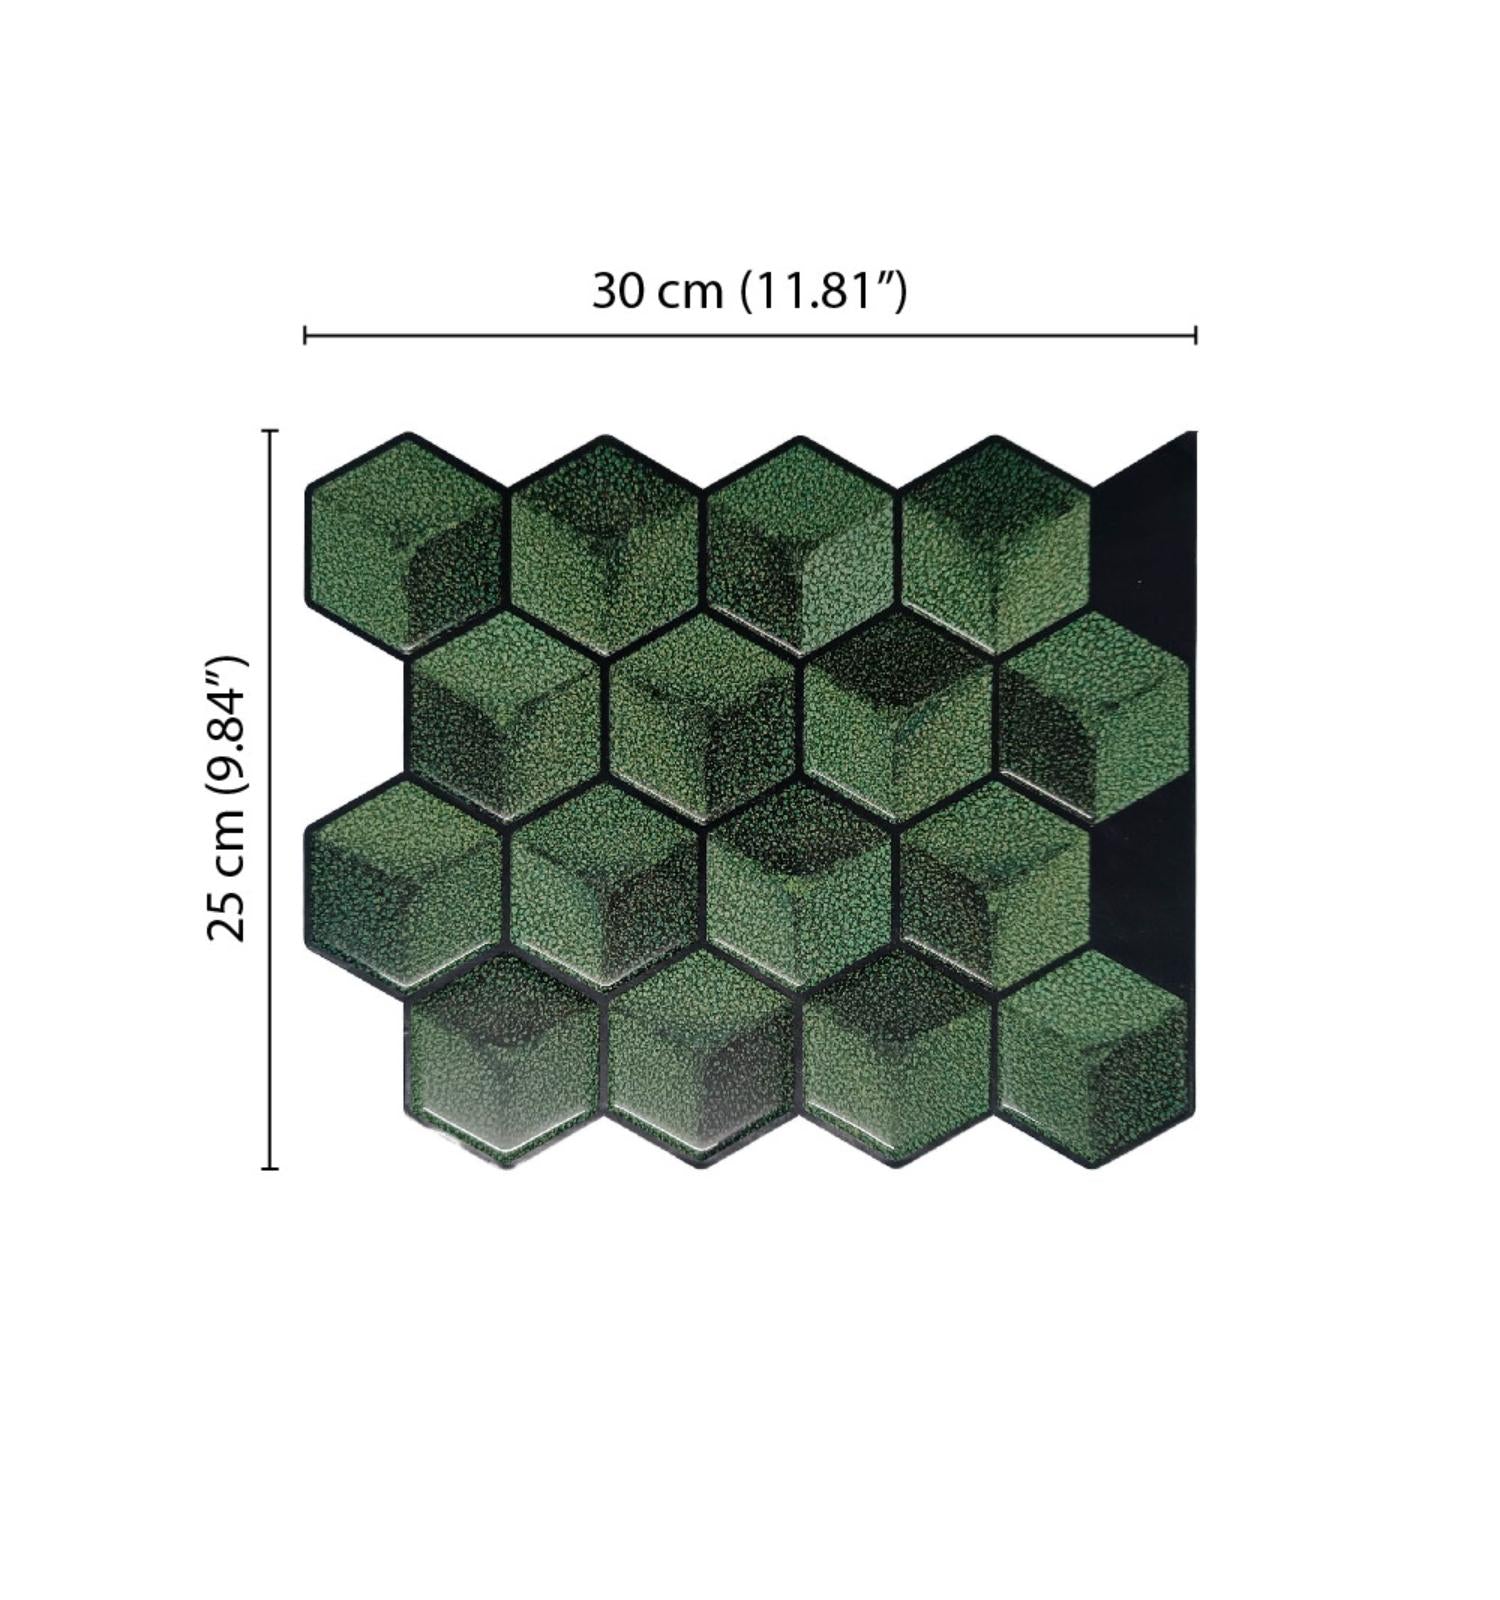 Sage Green peel and Stick Wall Tile | Hexagon Kitchen Backsplash Tiles | self Adhesive Tiles for Home Décor